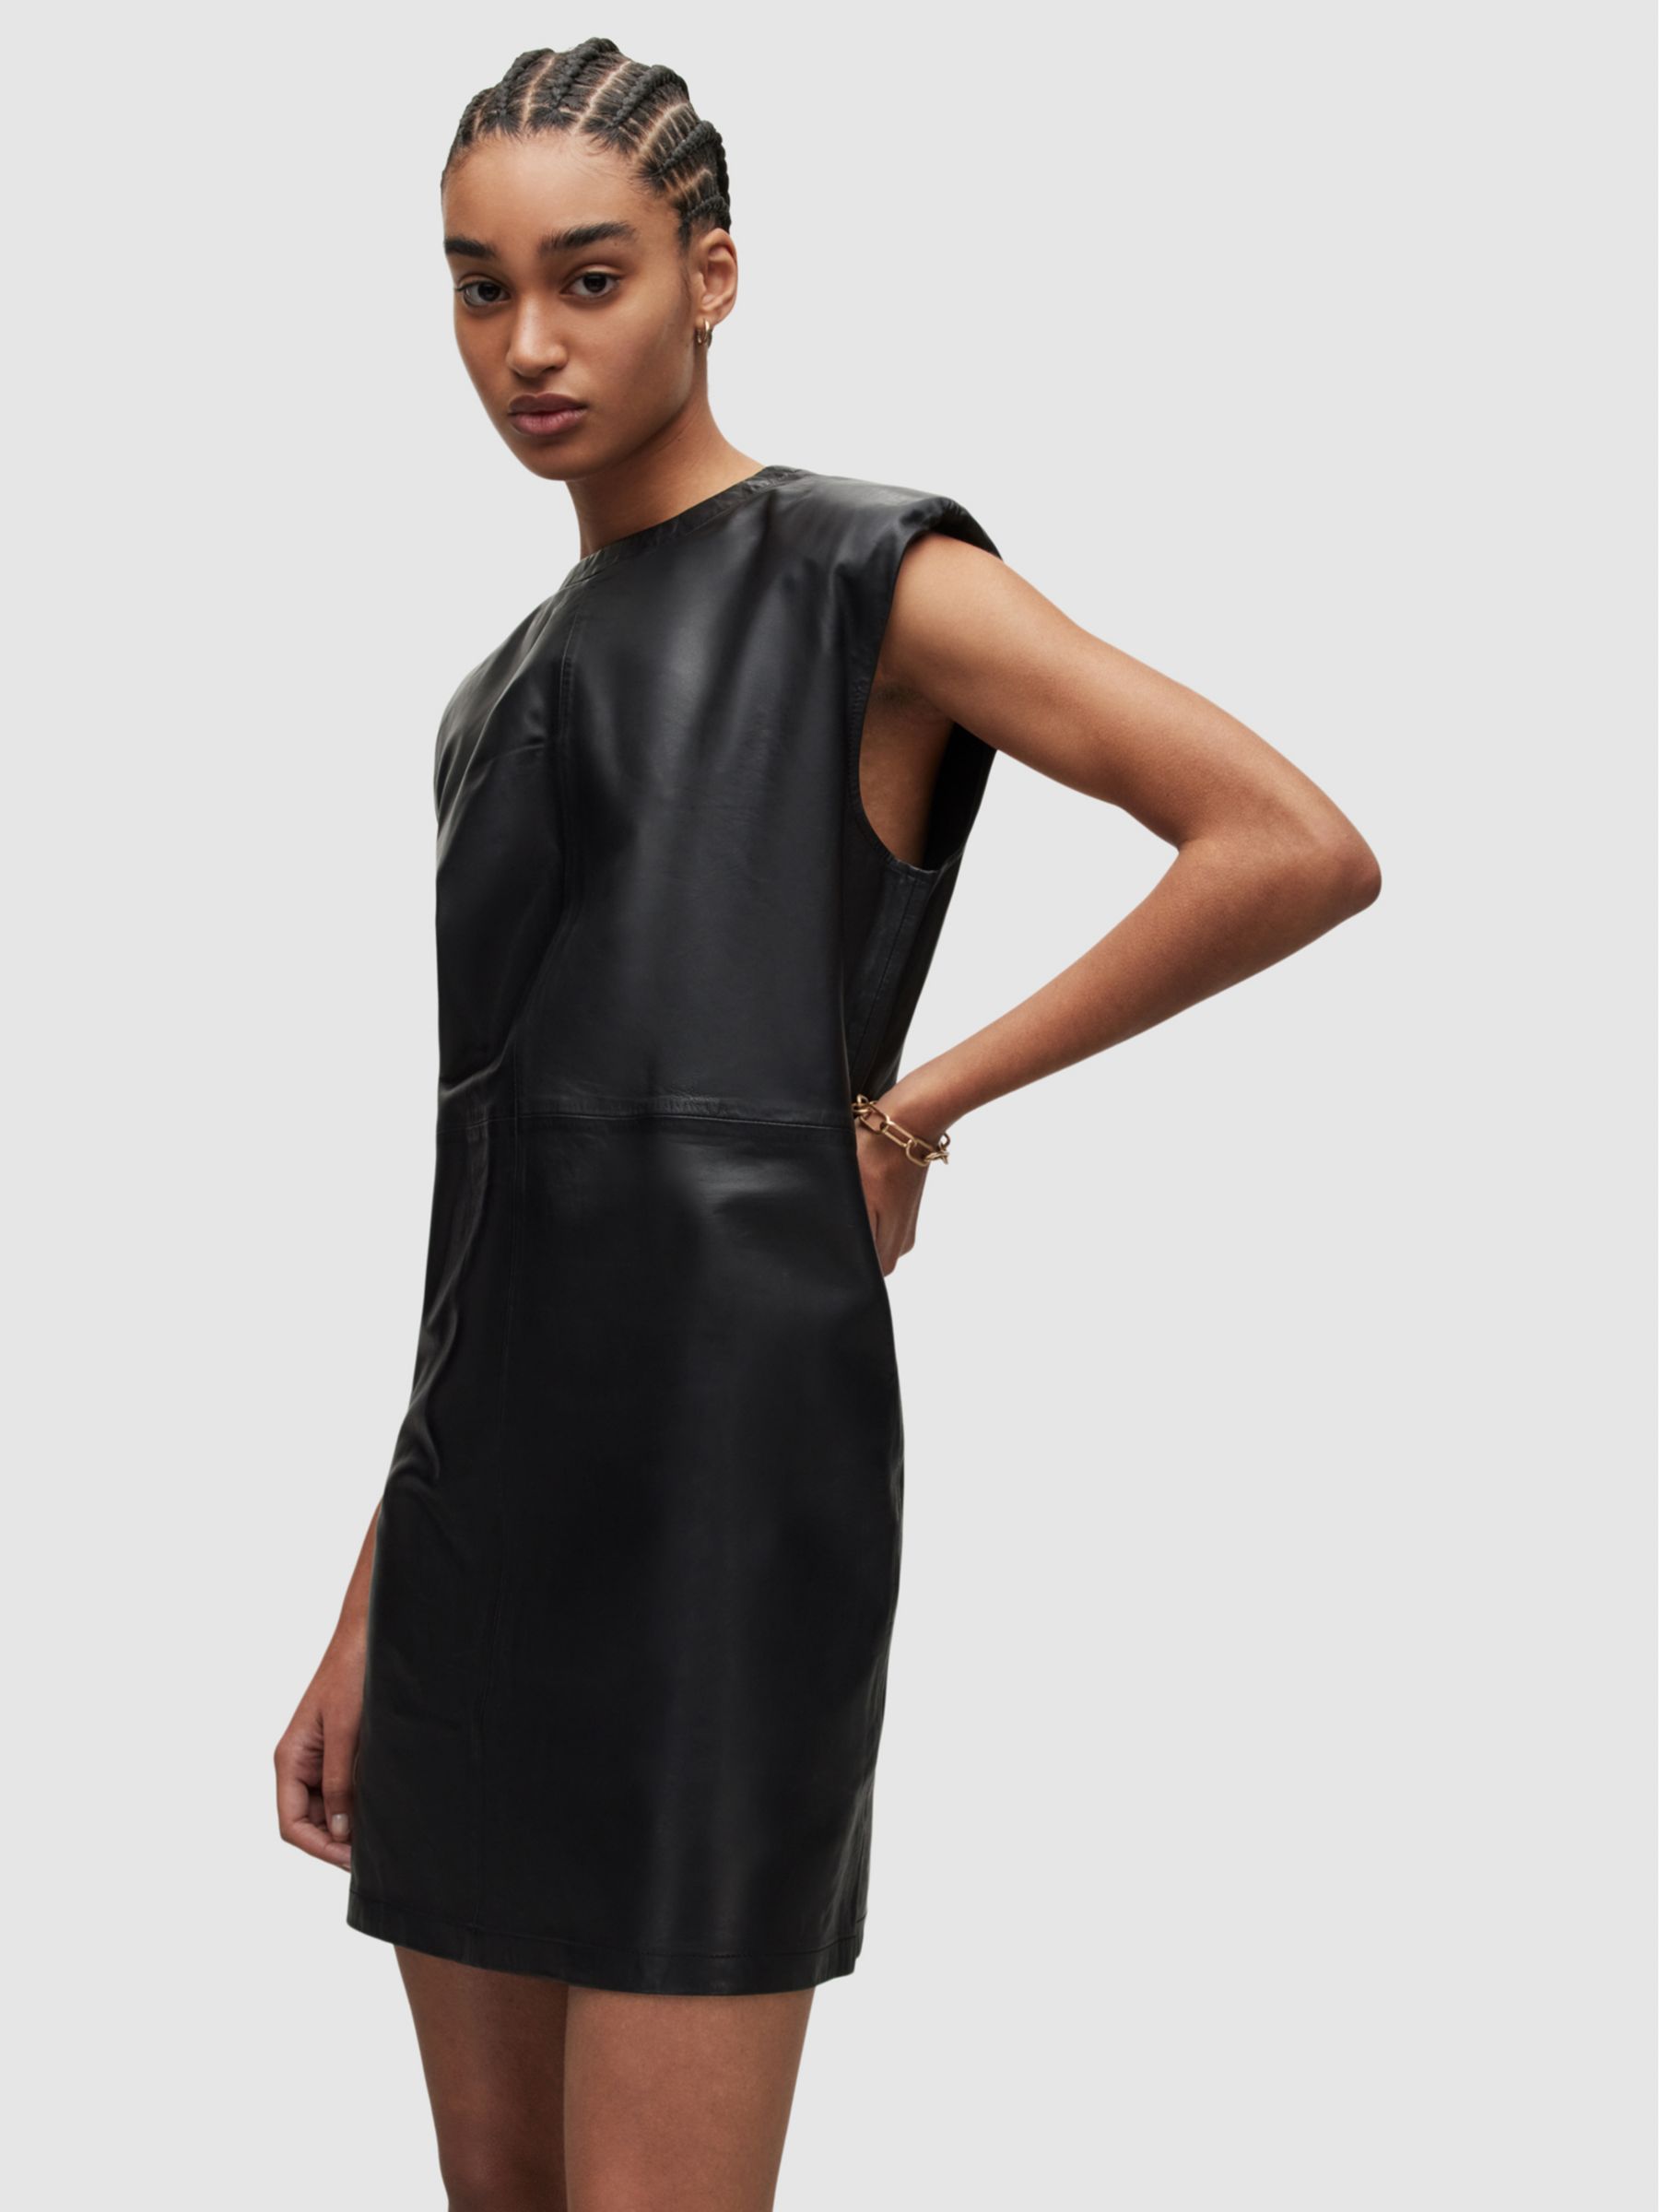 Zara - Faux Leather Dress - Black - Unisex